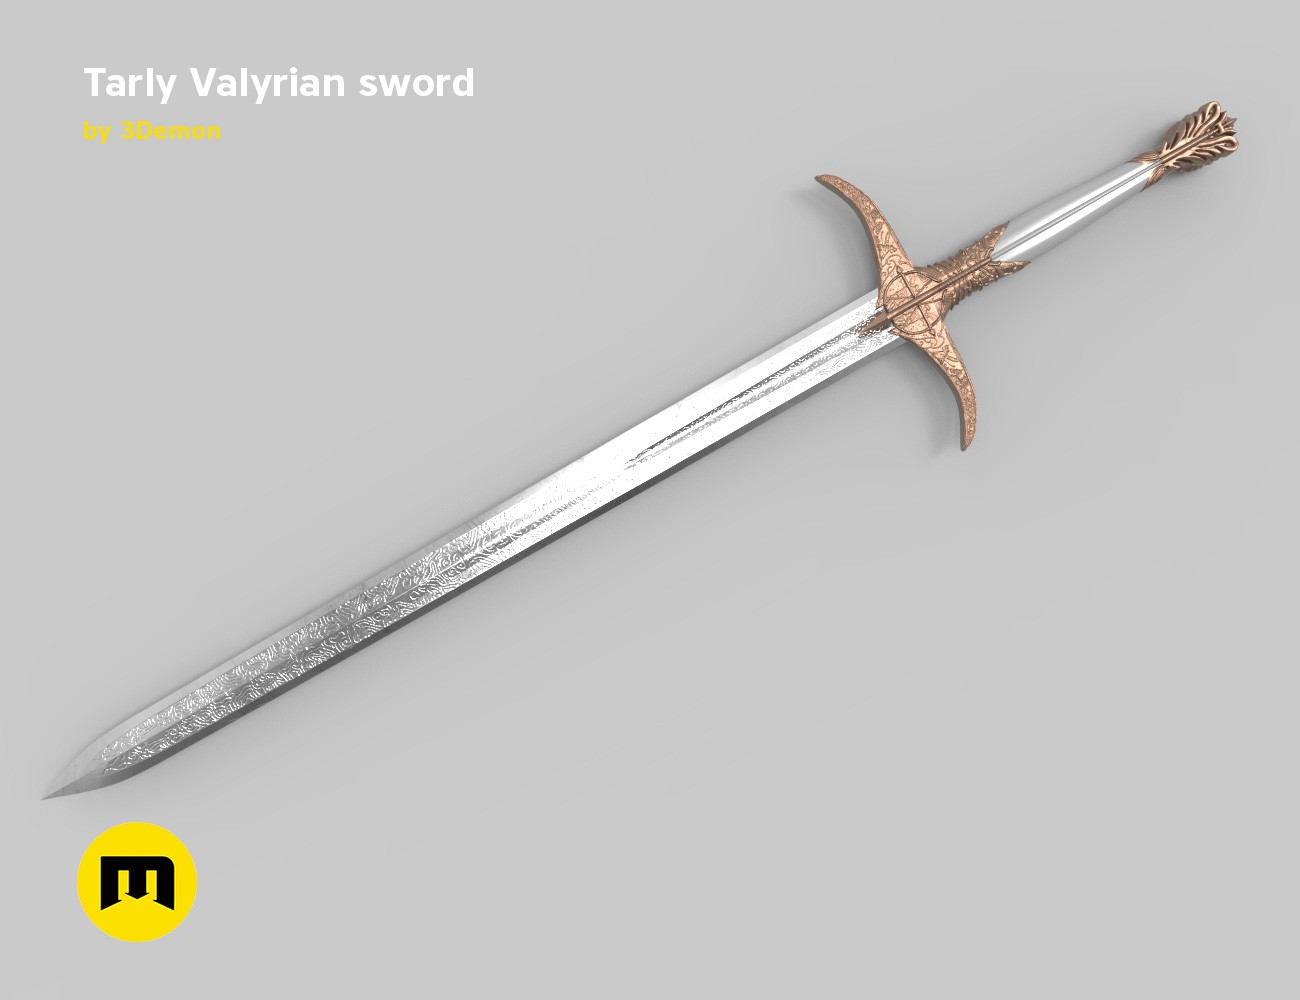 High valyrian. Меч Тарли. Valyrian Steel Sword. Меч семьи Тарли. Сэм Тарли с мечом.